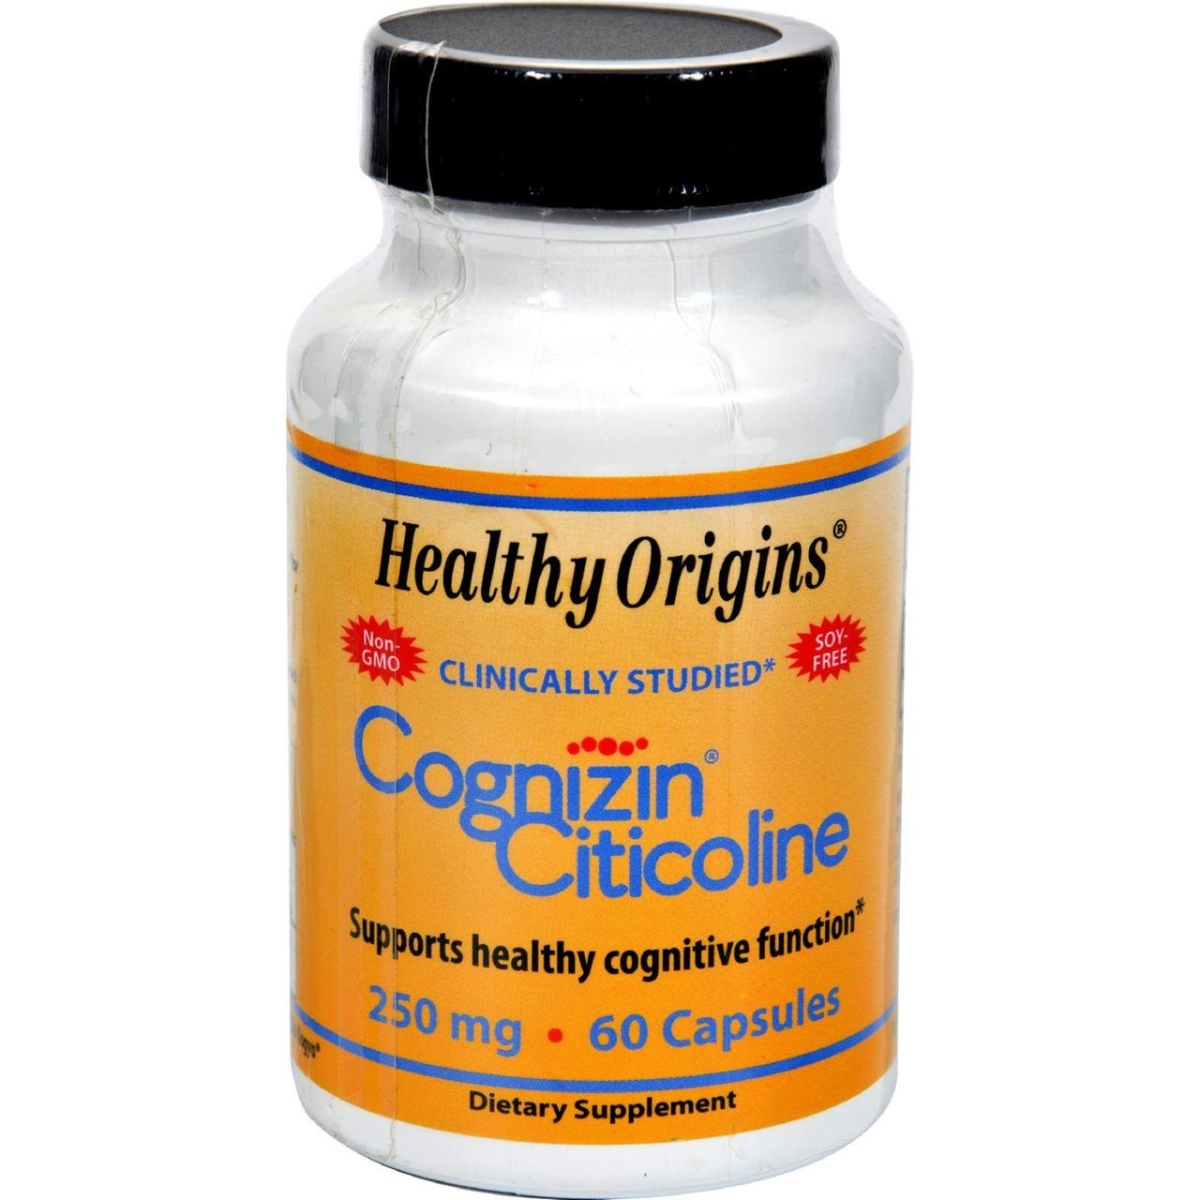 Hg0579359 250 Mg Cognizin Citicoline, 60 Capsules